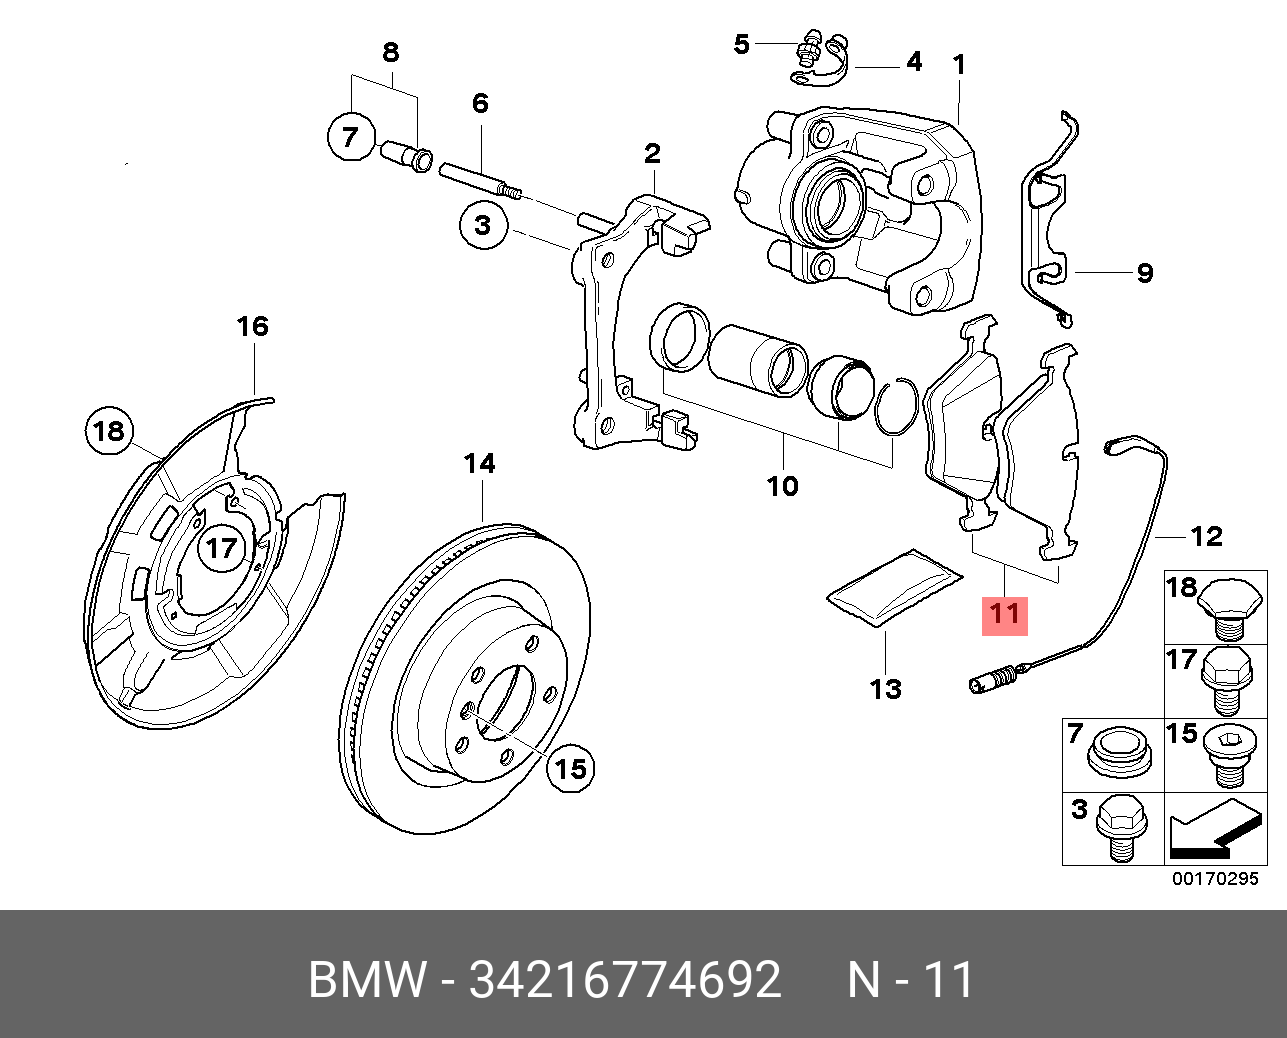 1 6 21 34. Задние тормозные колодки Performance для BMW e90. Схема передних тормозов БМВ е90. Направляющие тормозных колодок задние BMW e90. Задняя тормозная система БМВ Е 90.